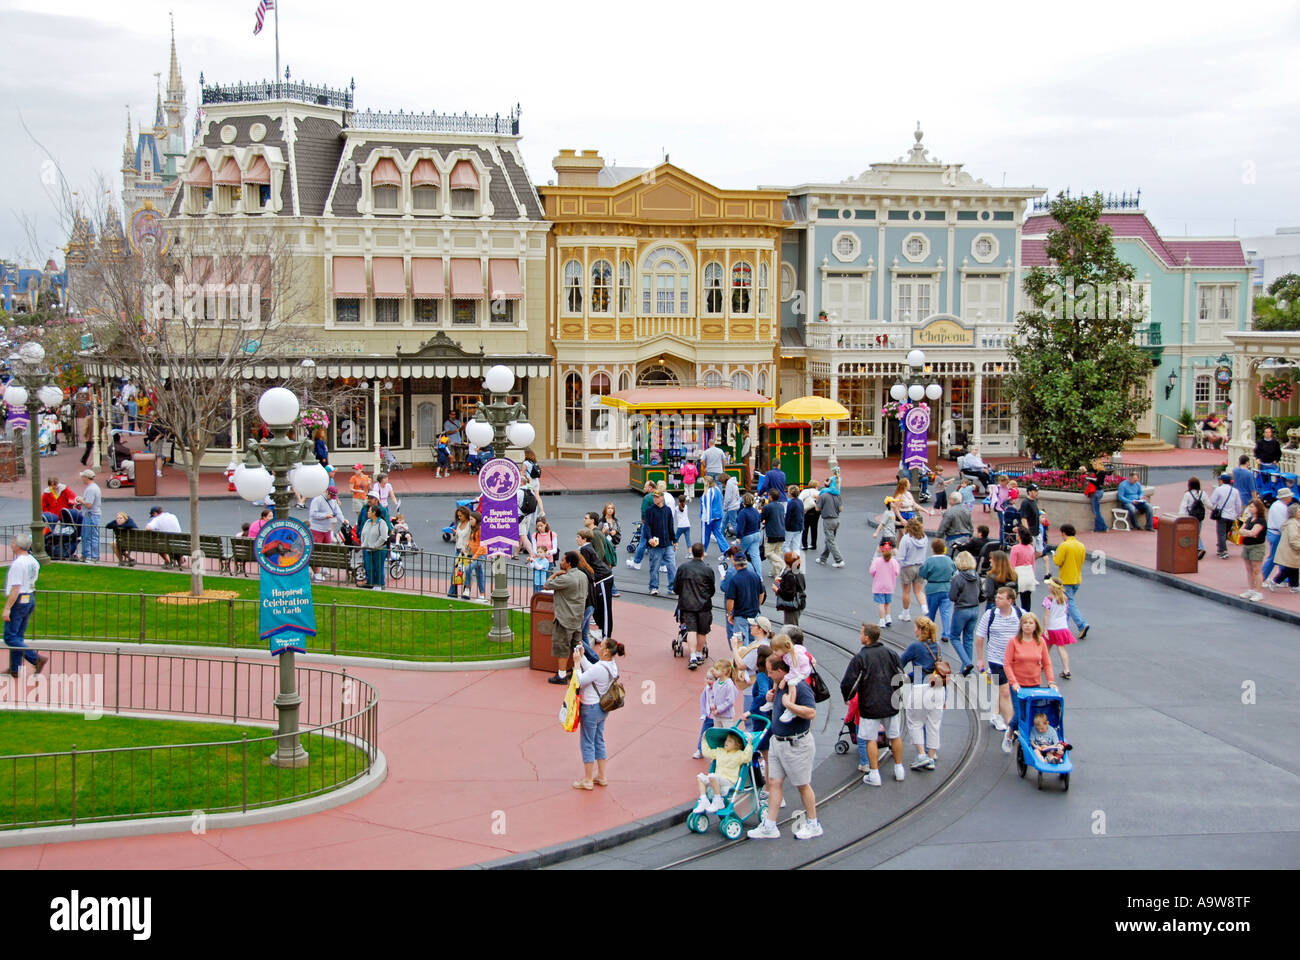 Magic Kingdom at Walt Disney World Orlando Florida FL Stock Photo